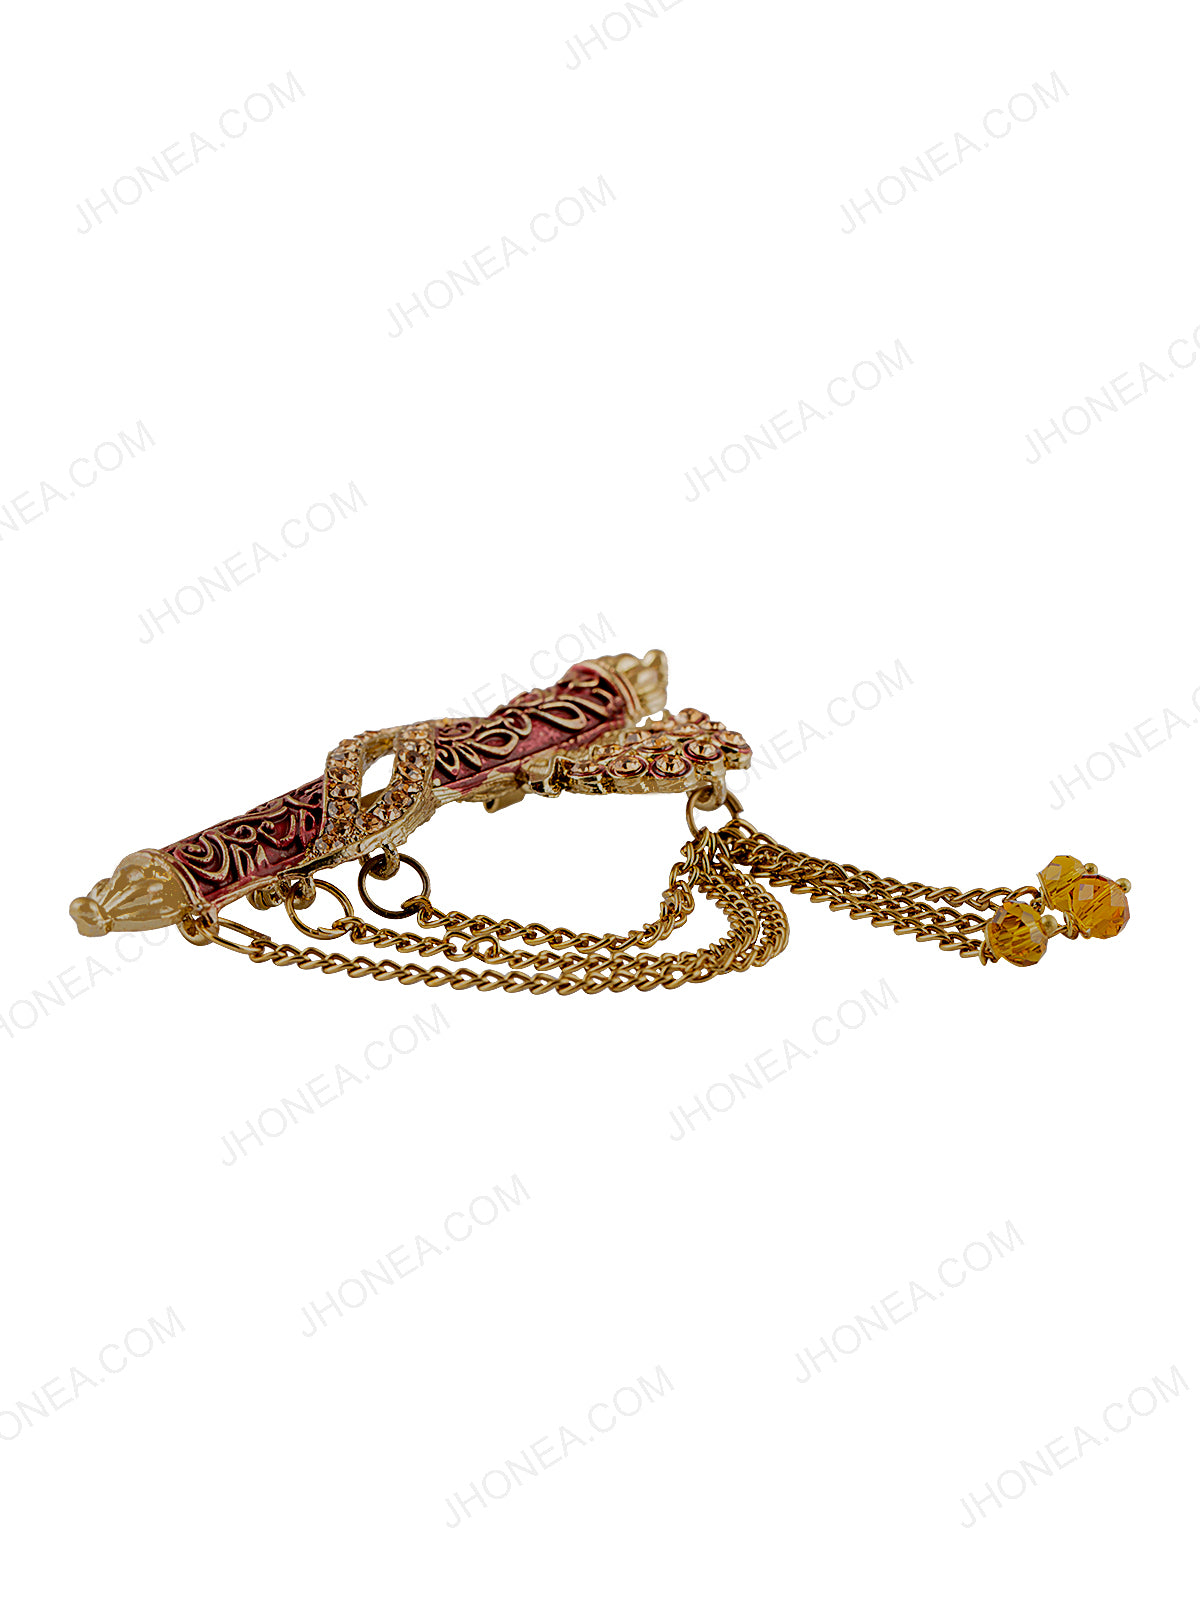 Antique Gold Diamond Ethnic Chain Brooch